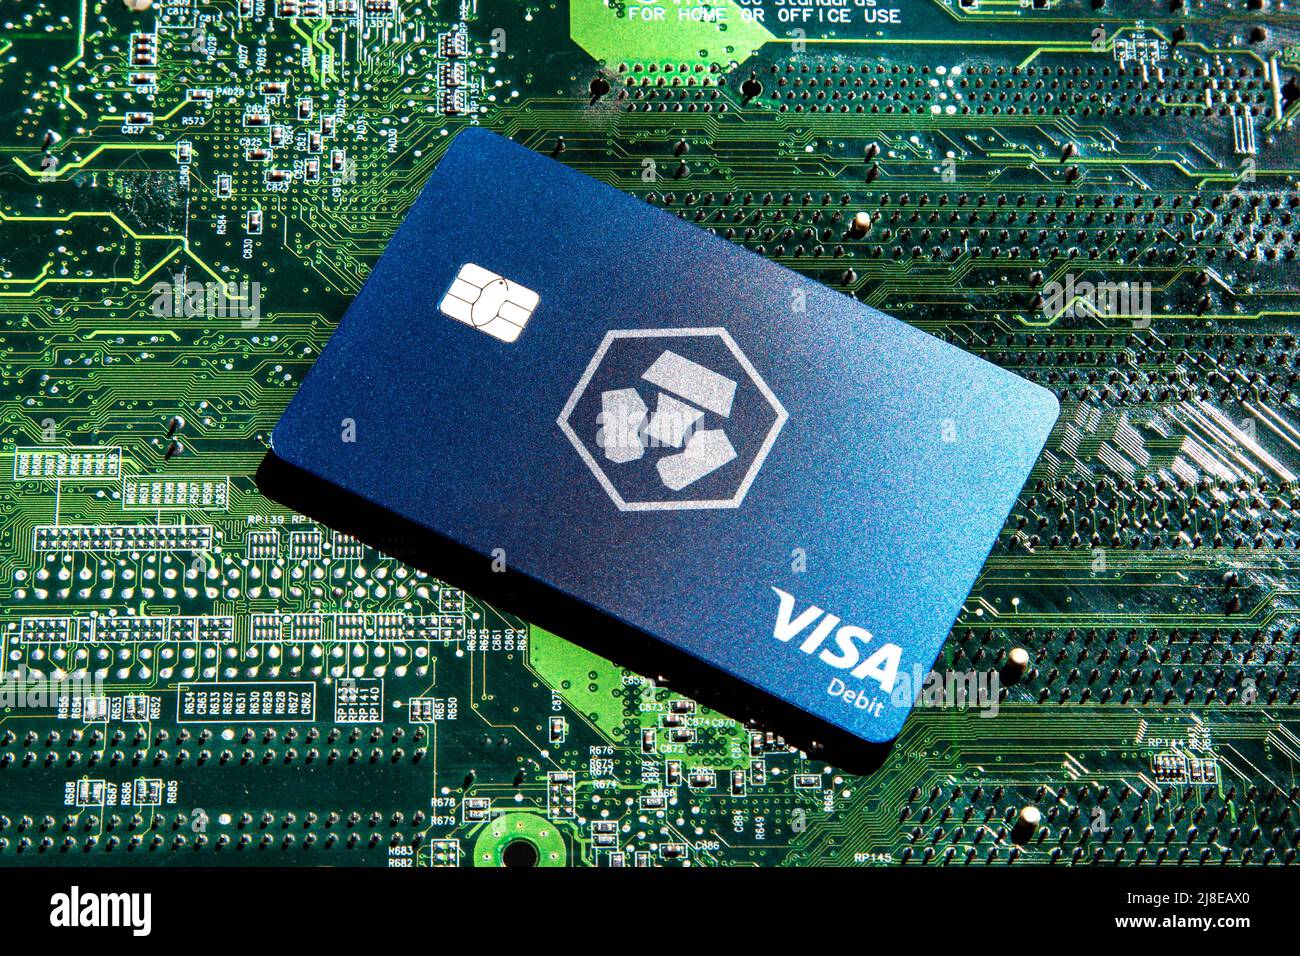 Crypto.com Visa Debit Reward Card on circuit board background Stock Photo